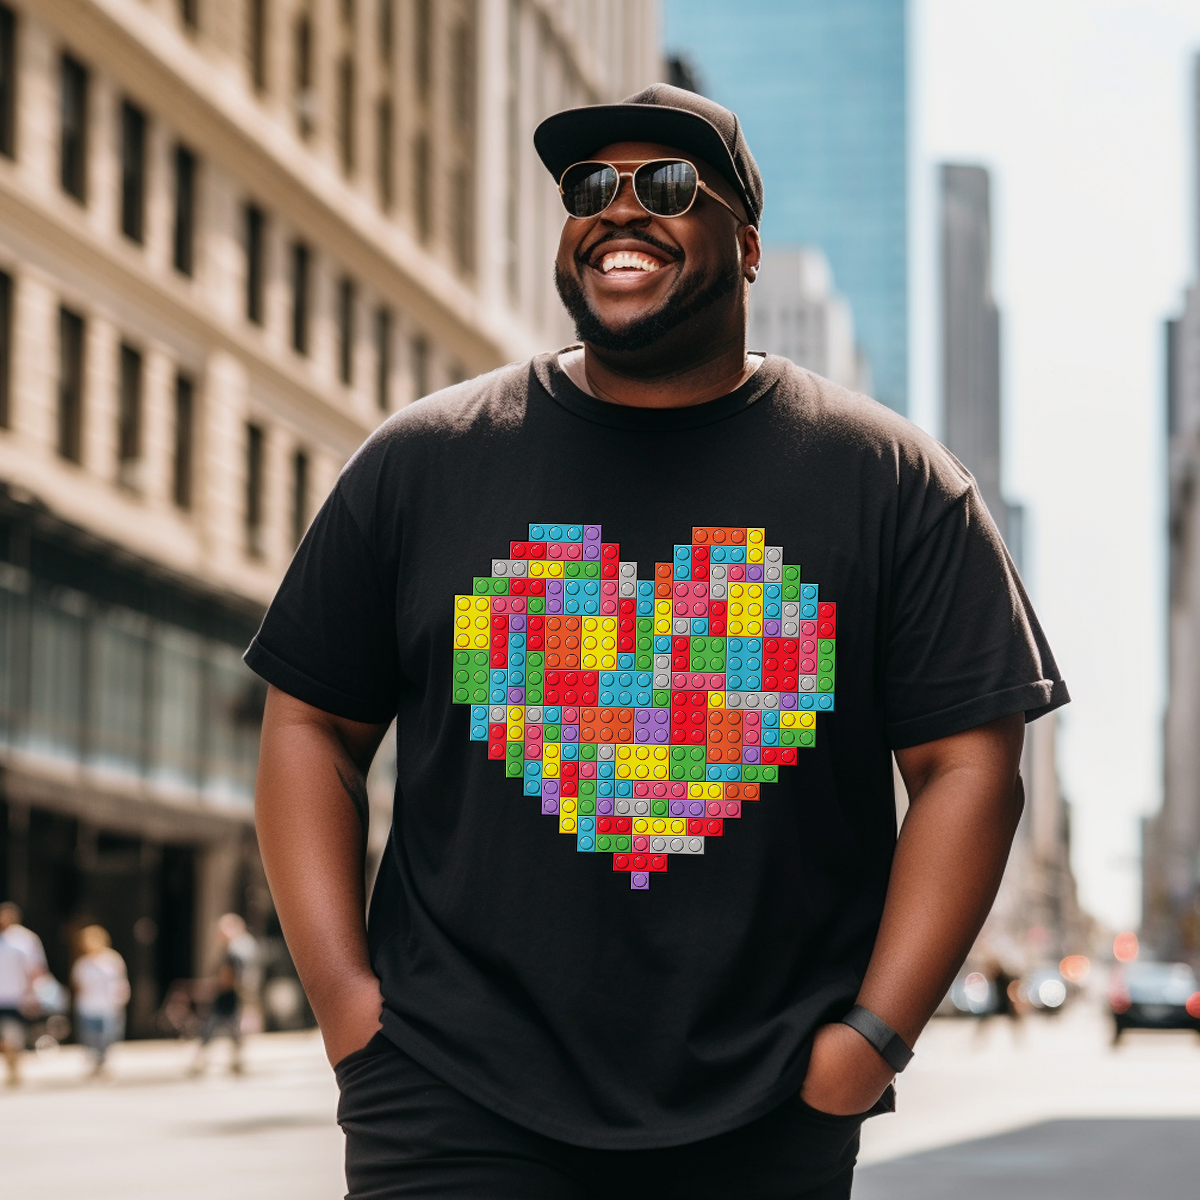 Block Brick Building Heart Valentines Day T-shirt, Men Plus Size Oversize T-shirt for Big & Tall Man